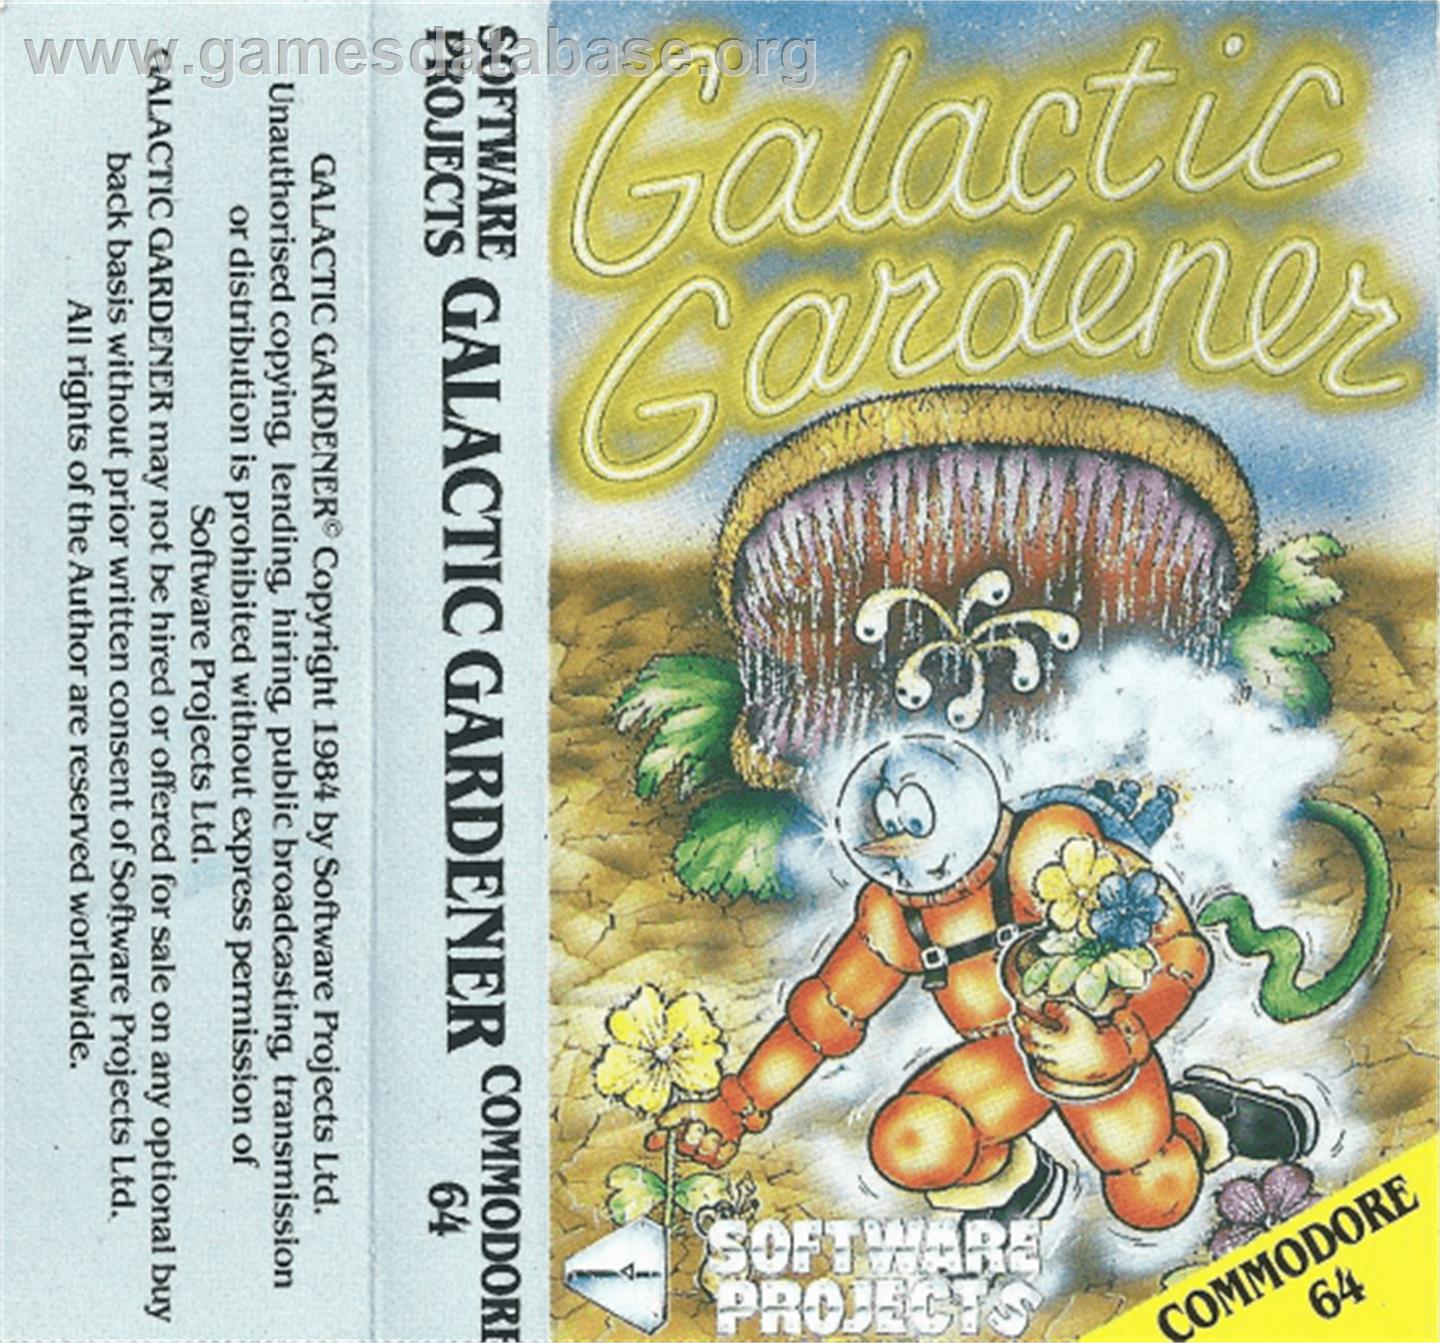 Galactic Gardener - Commodore 64 - Artwork - Box